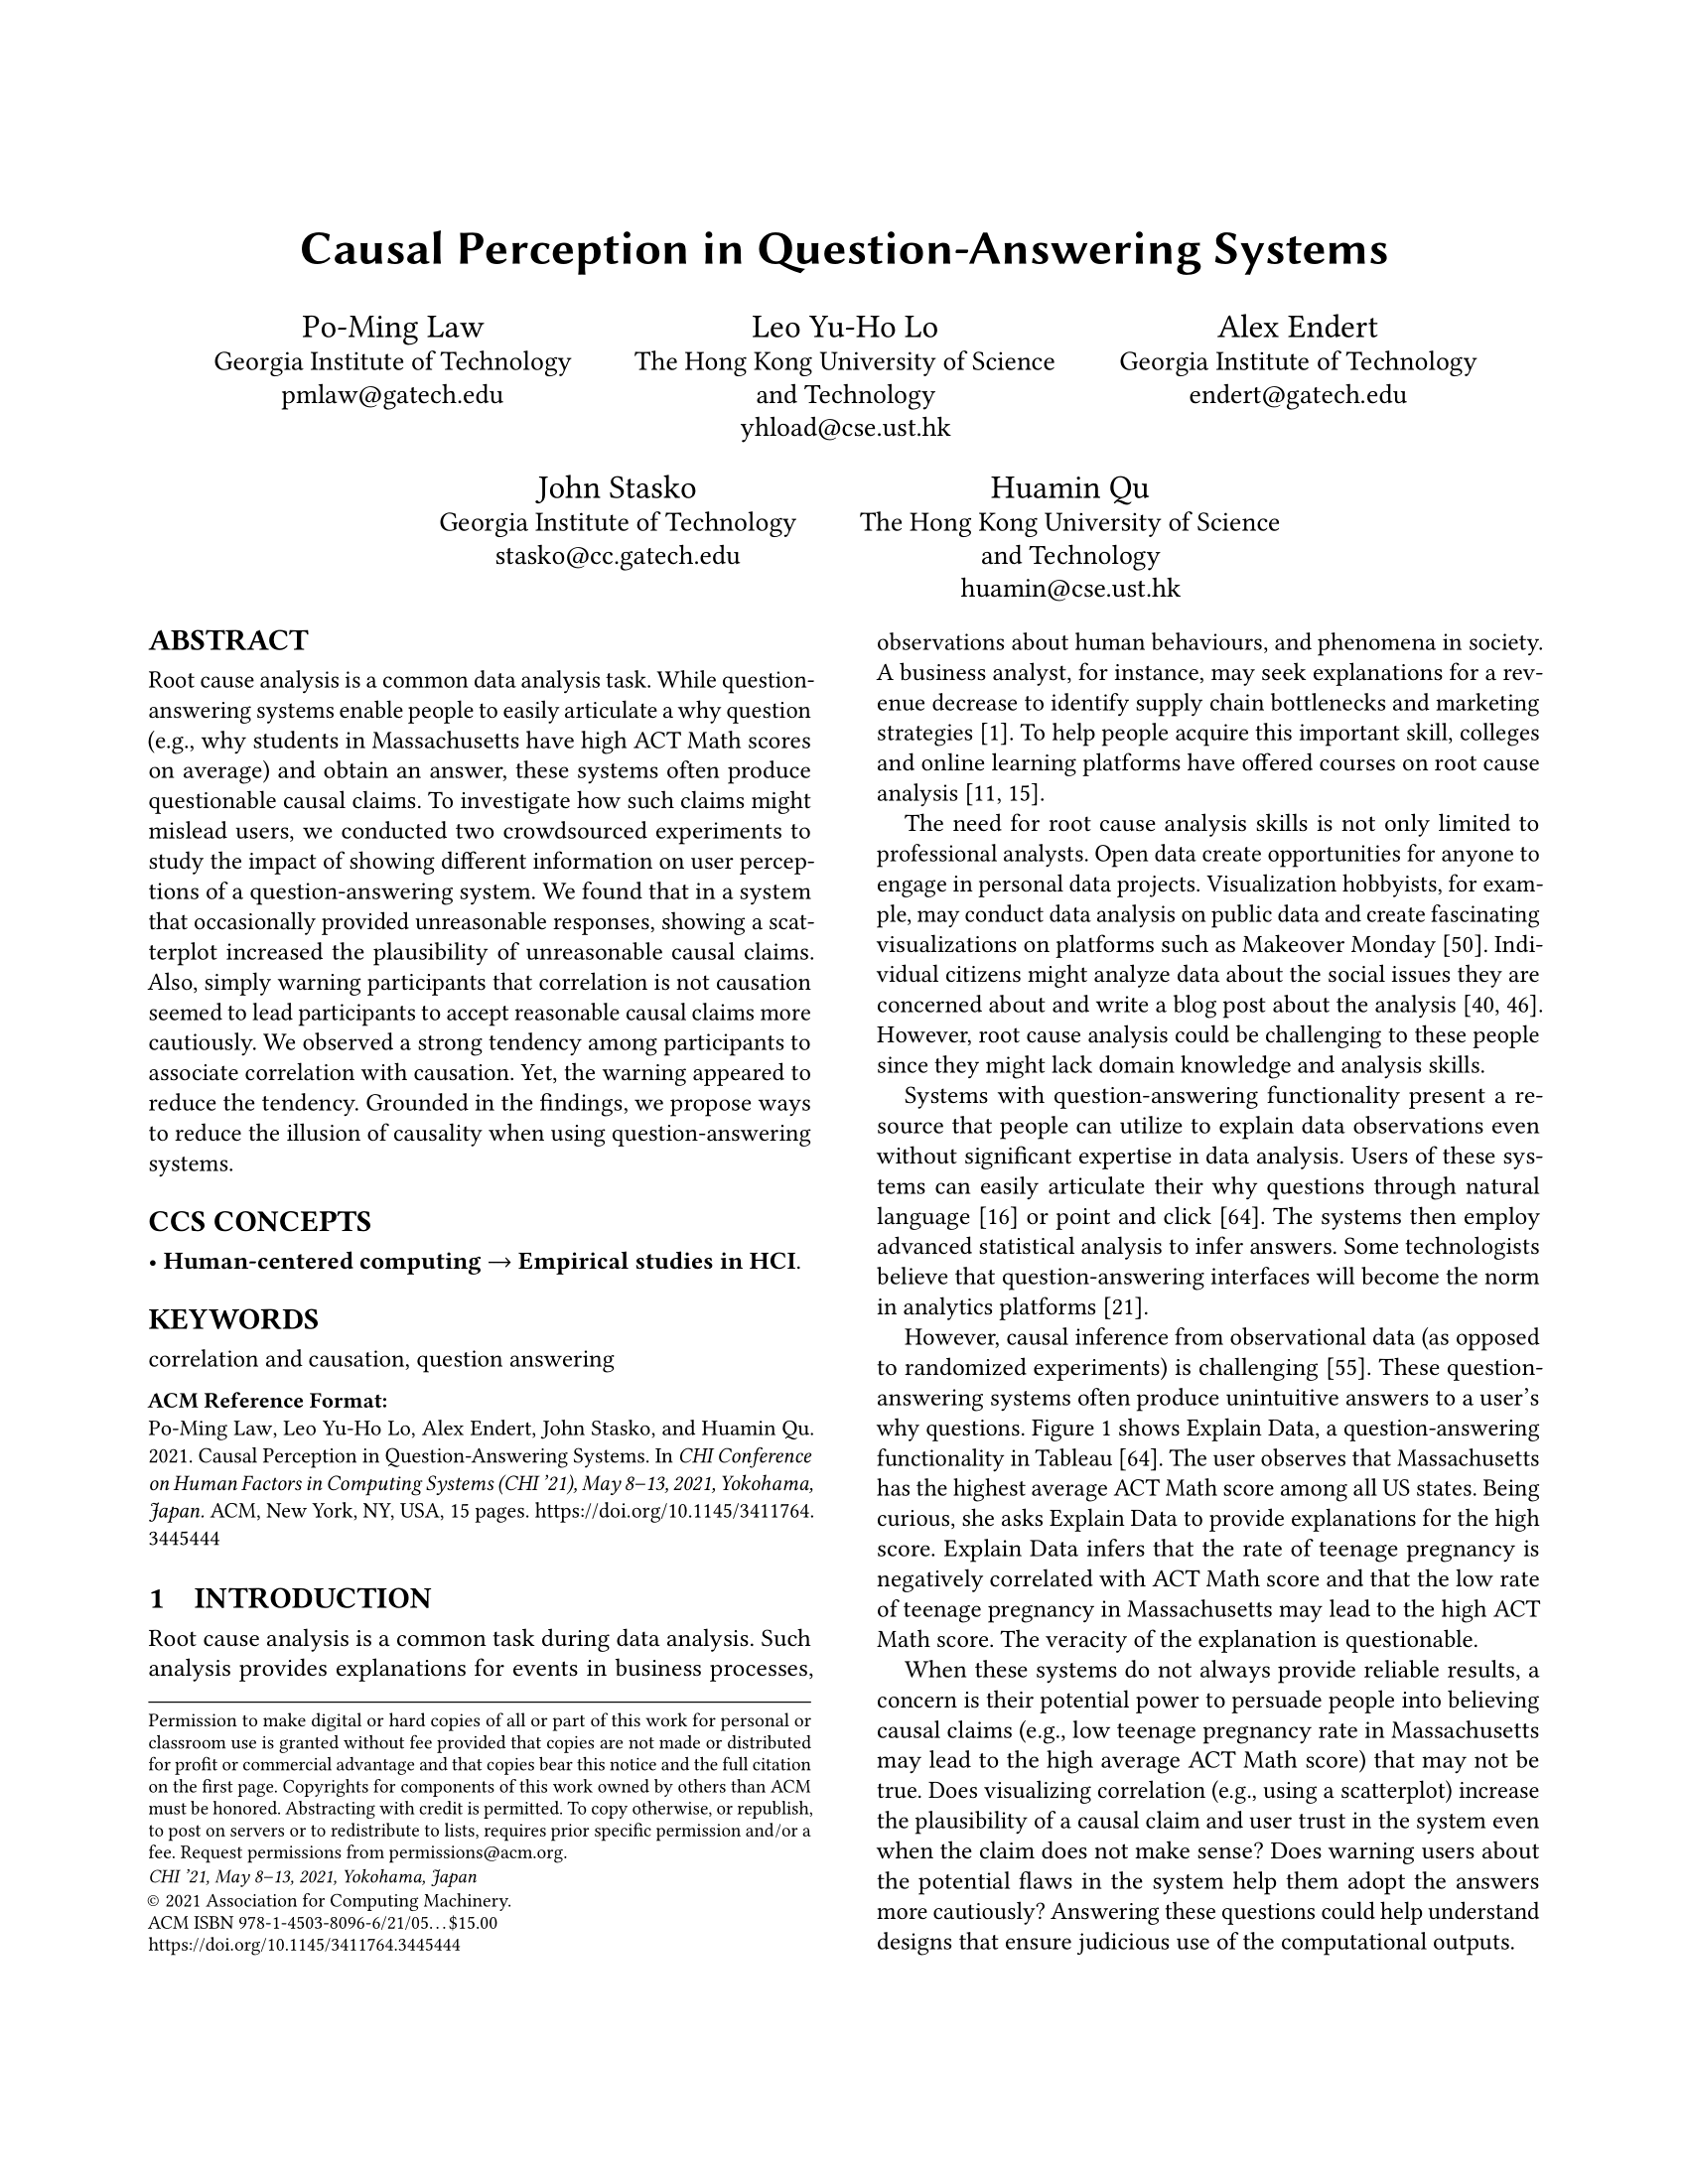 CHI 2021 paper